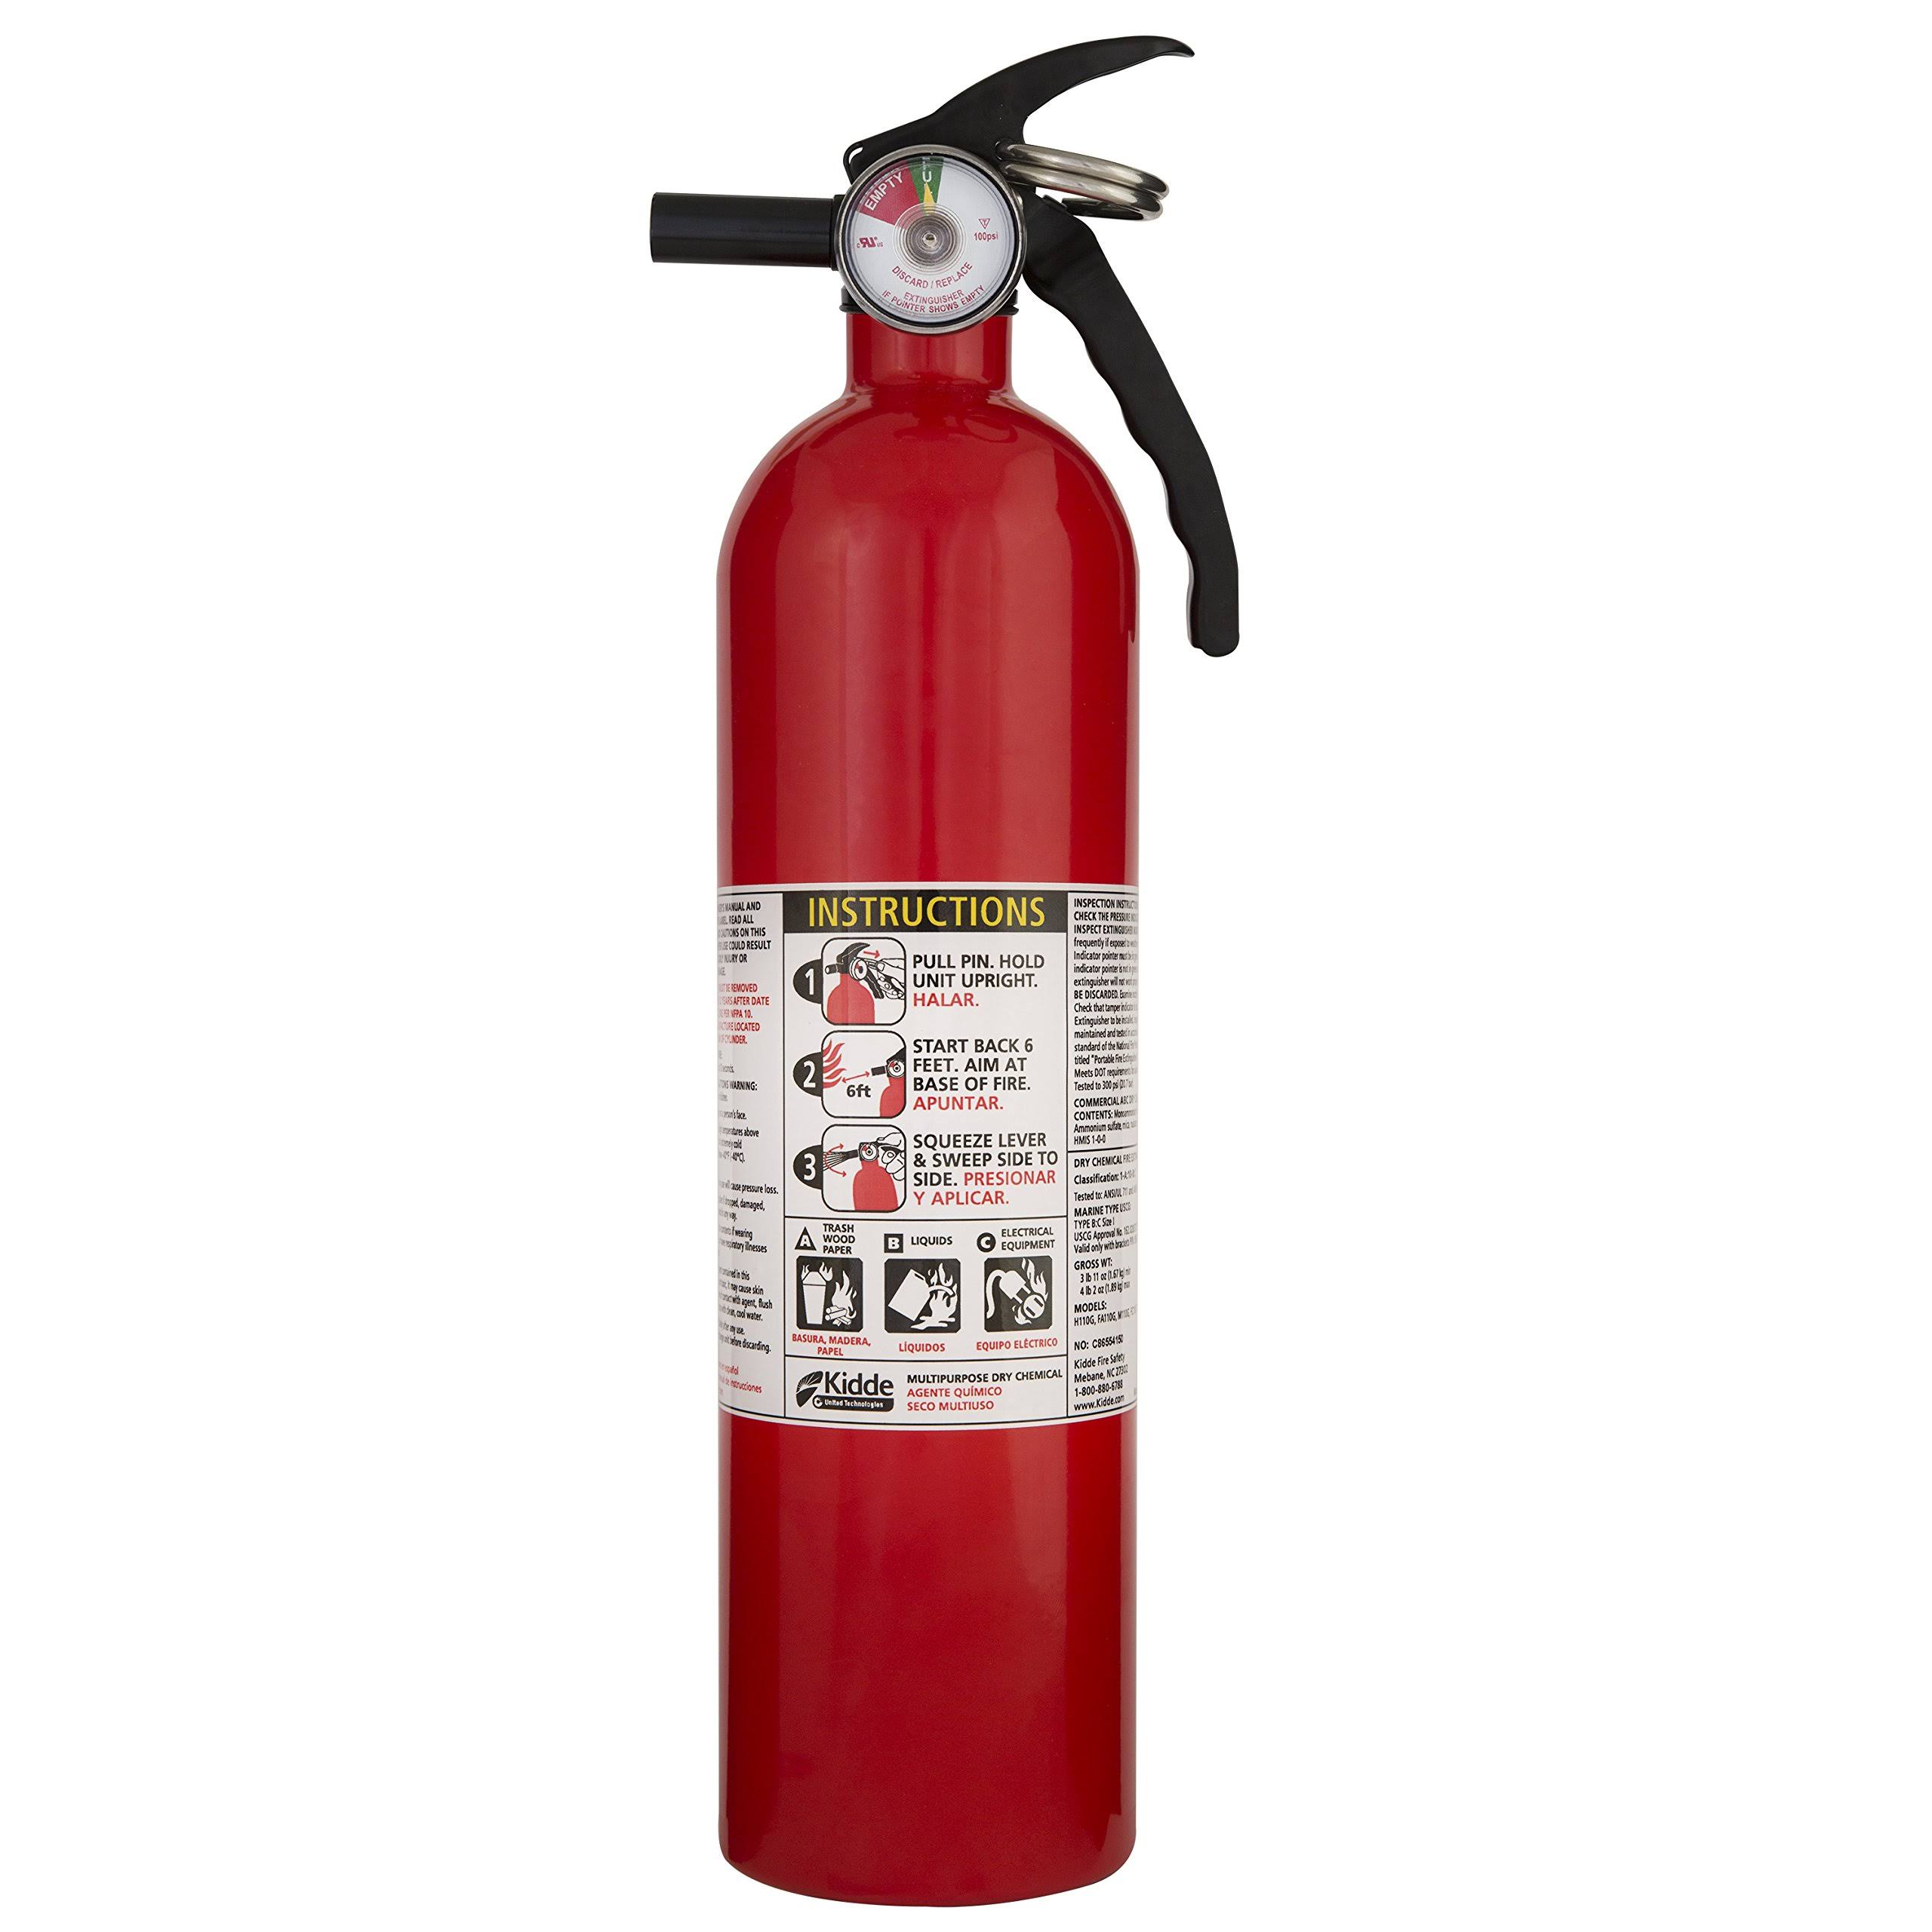 Kidde Home Metal Valve Fire Extinguisher